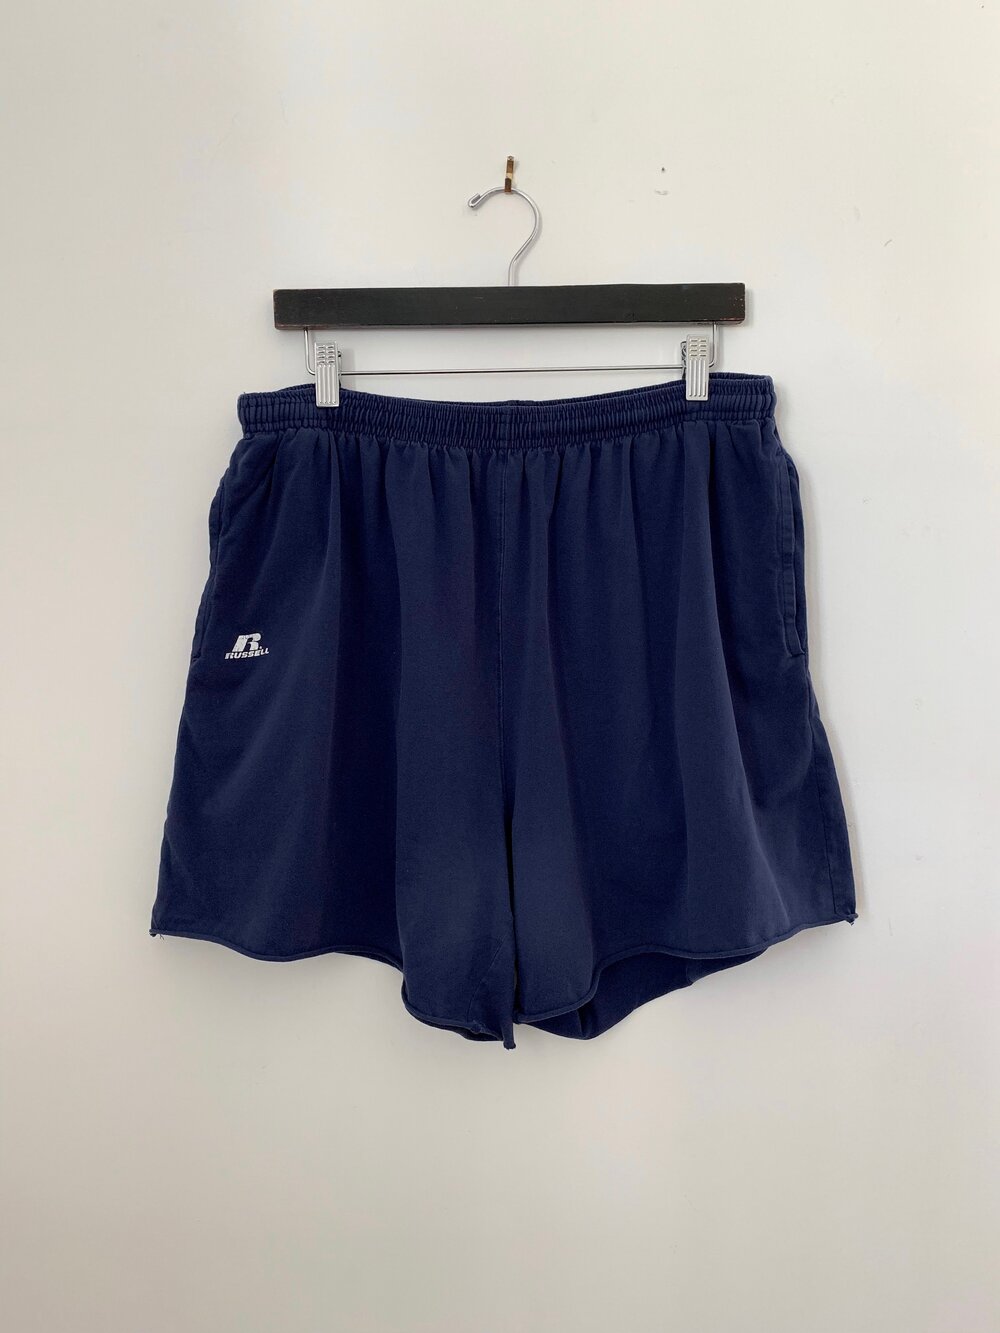 Navy Shorts.jpg